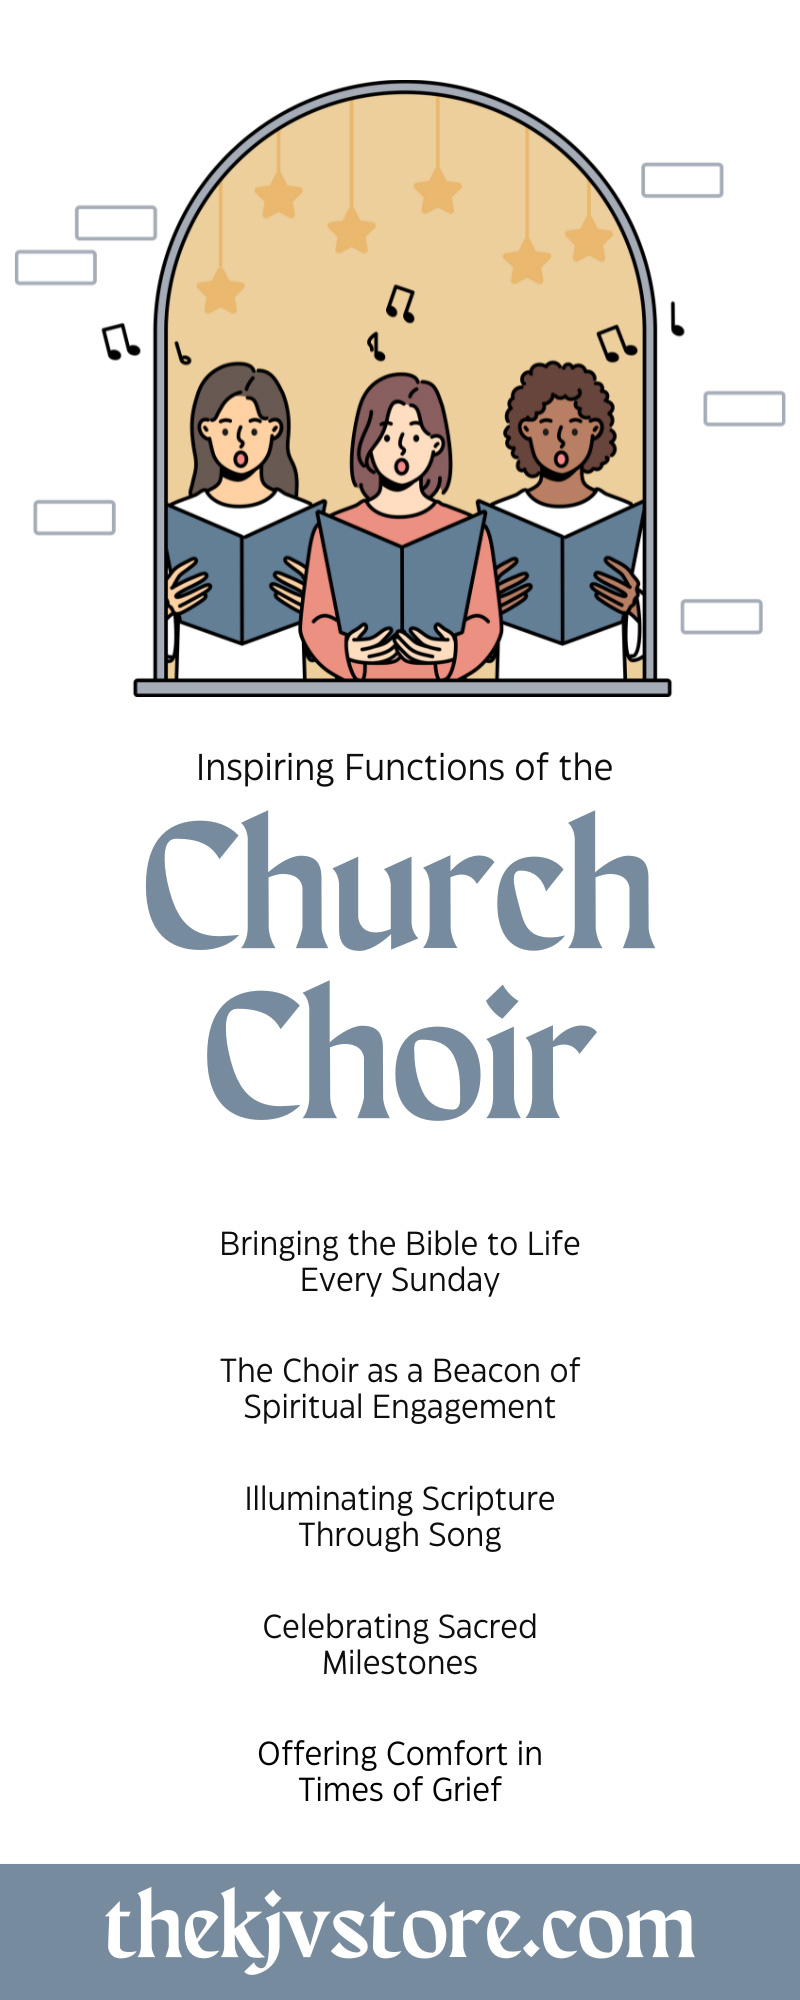 7 Inspiring Functions of the Church Choir